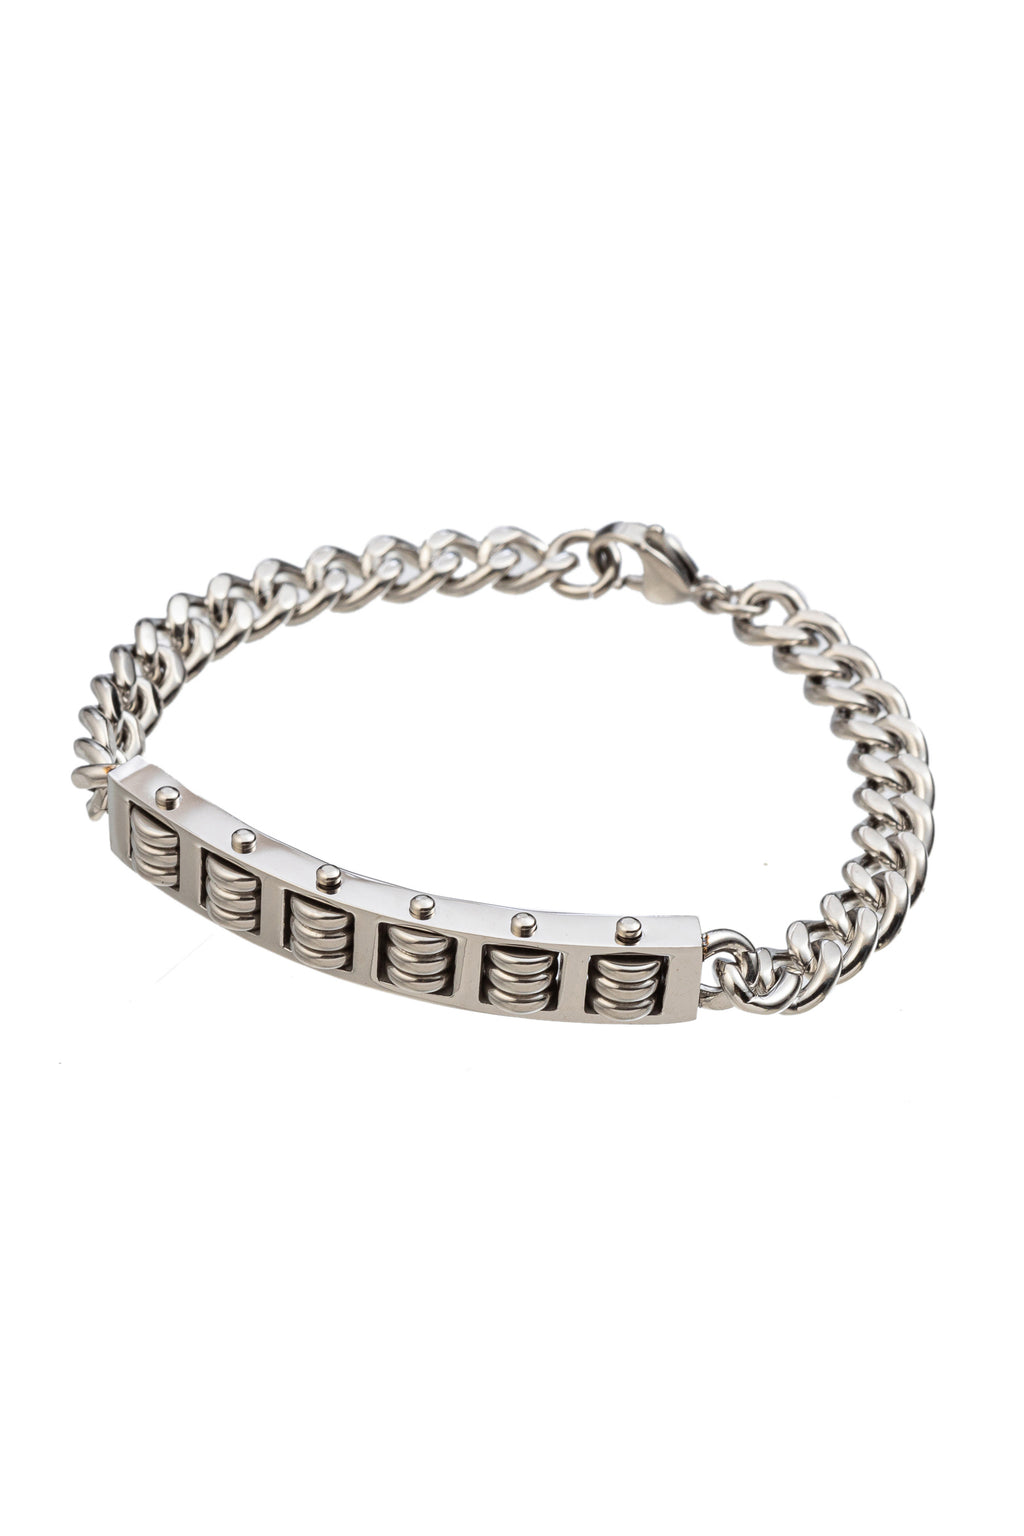 Silver tone titanium chain bracelet.